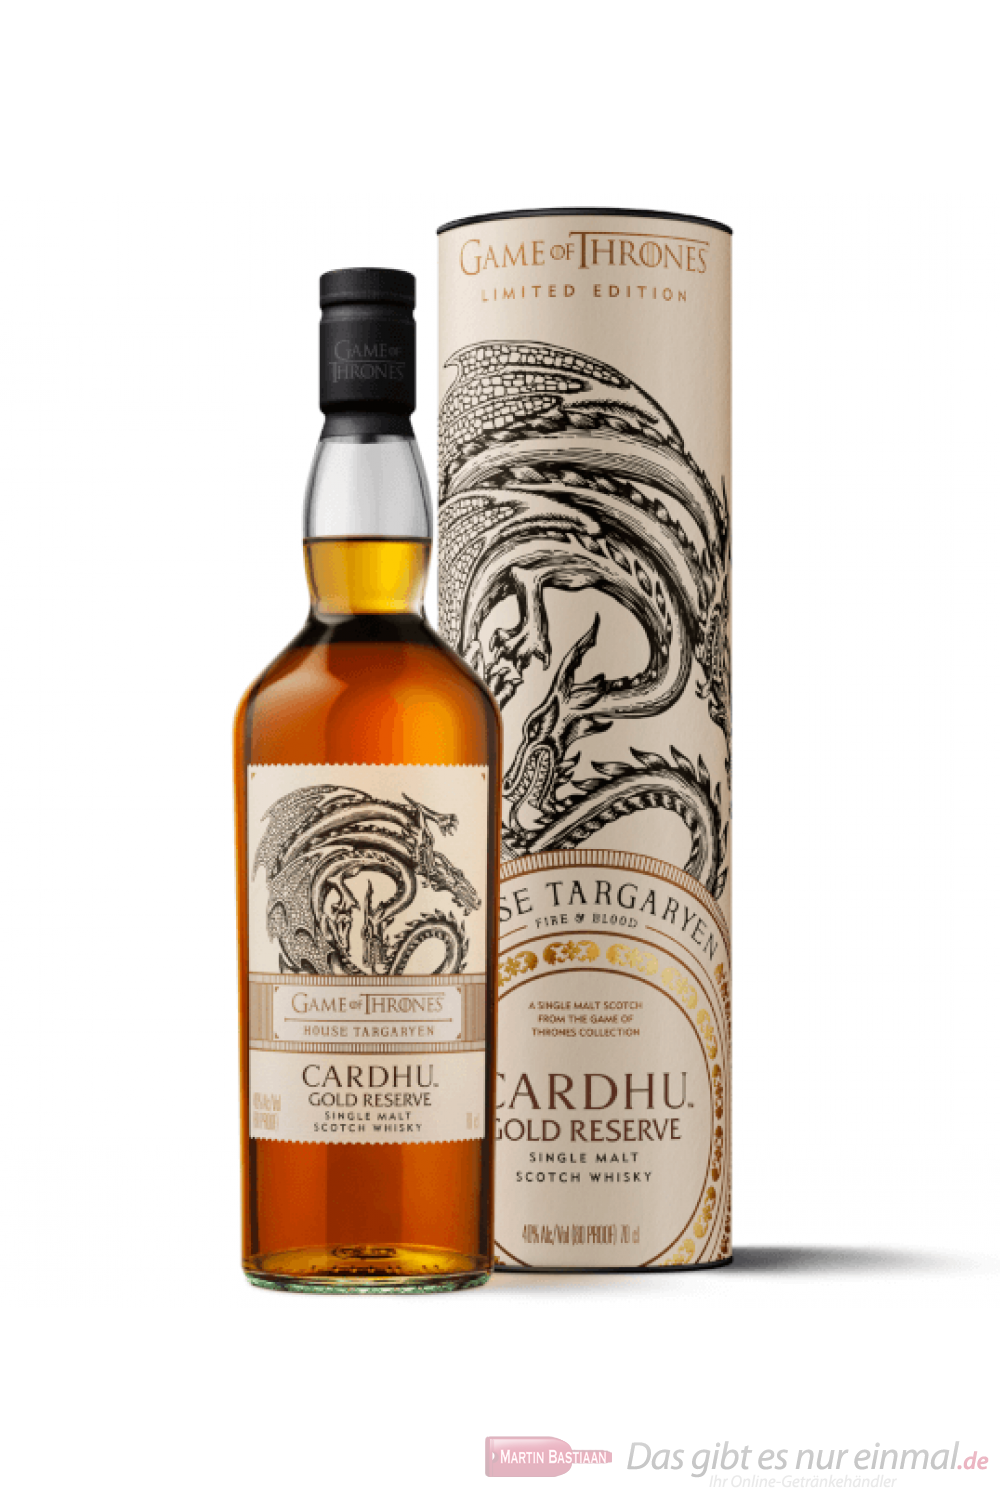 Game of Thrones House Targaryen Cardhu Gold Reserve Single Malt Scotch Whisky 0,7l